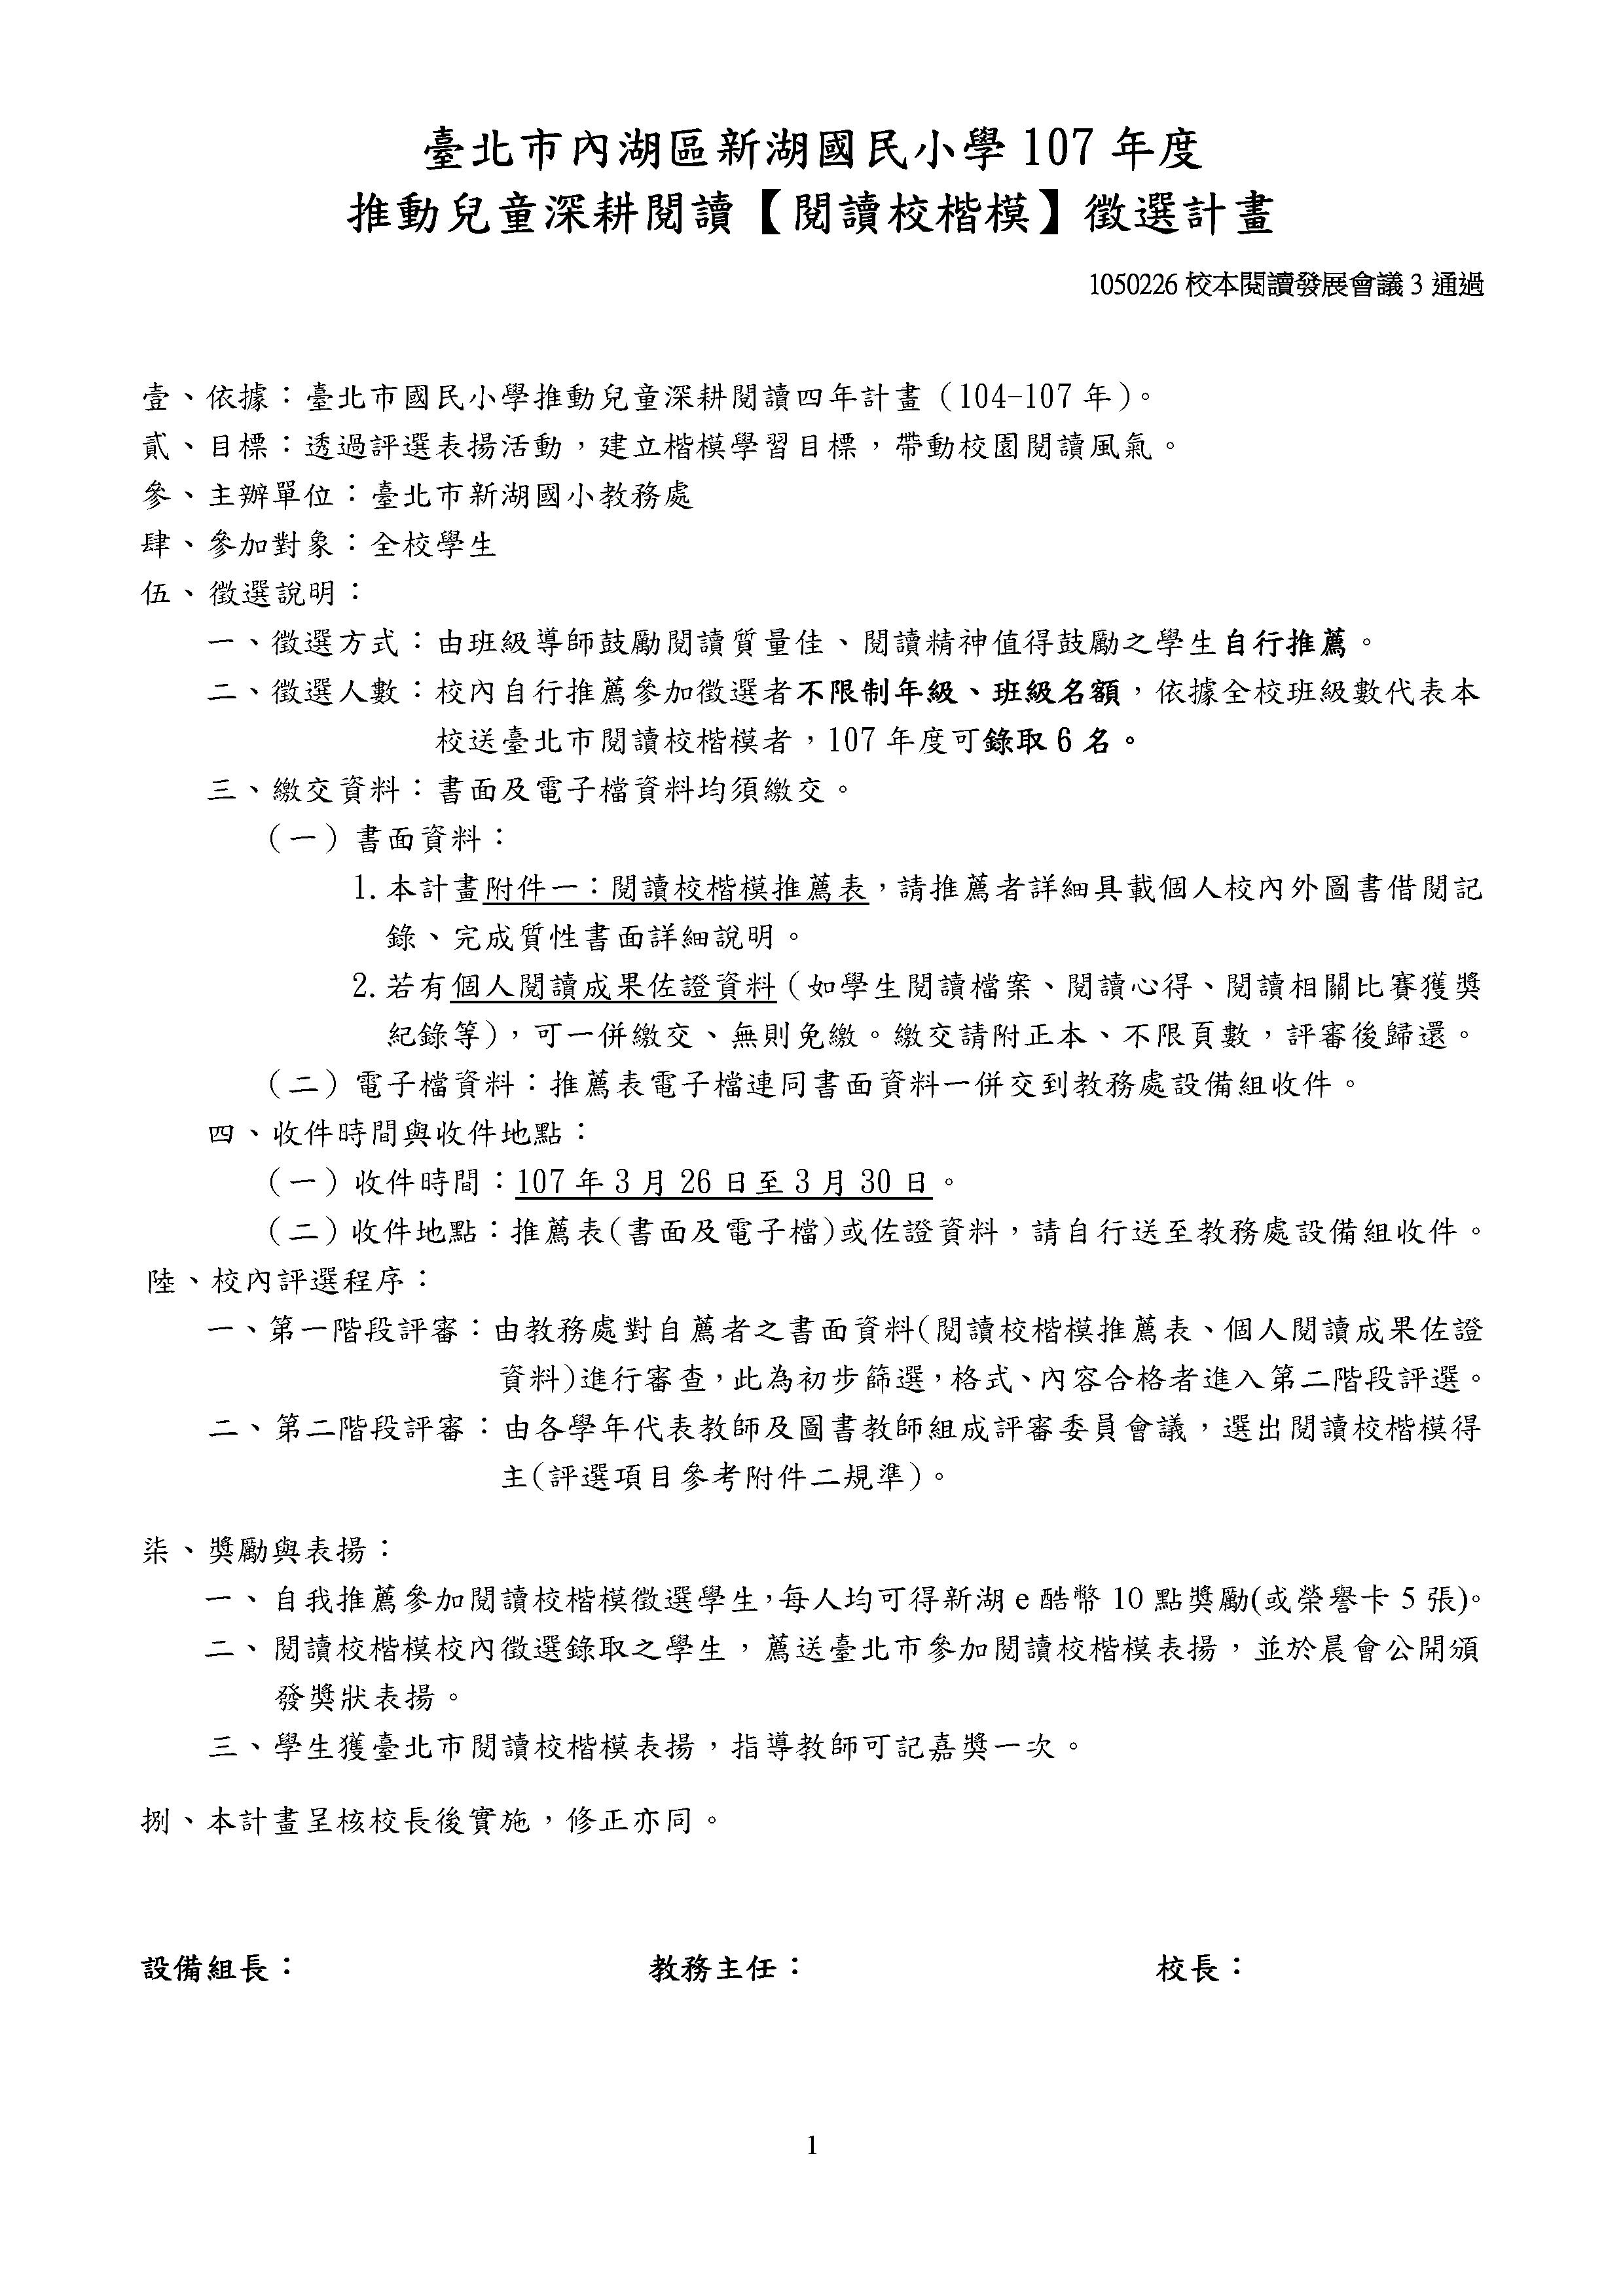 Microsoft Word - 107新湖國小閱讀校楷模計畫.jpeg